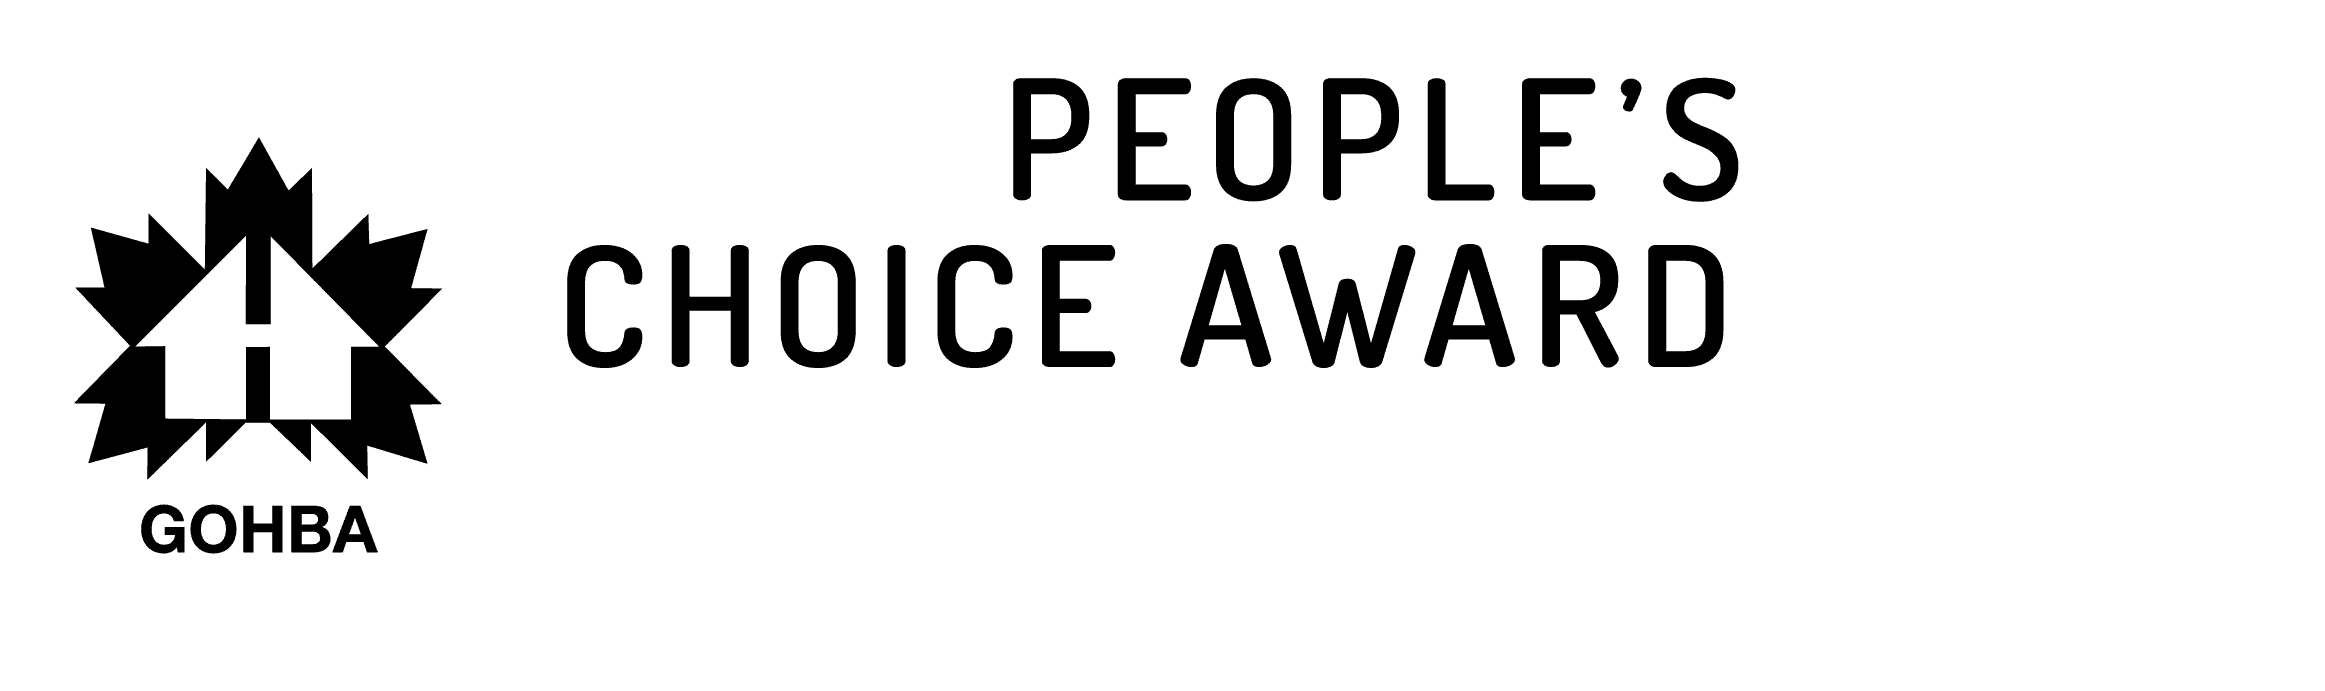 2022 Peoples choice award finalist